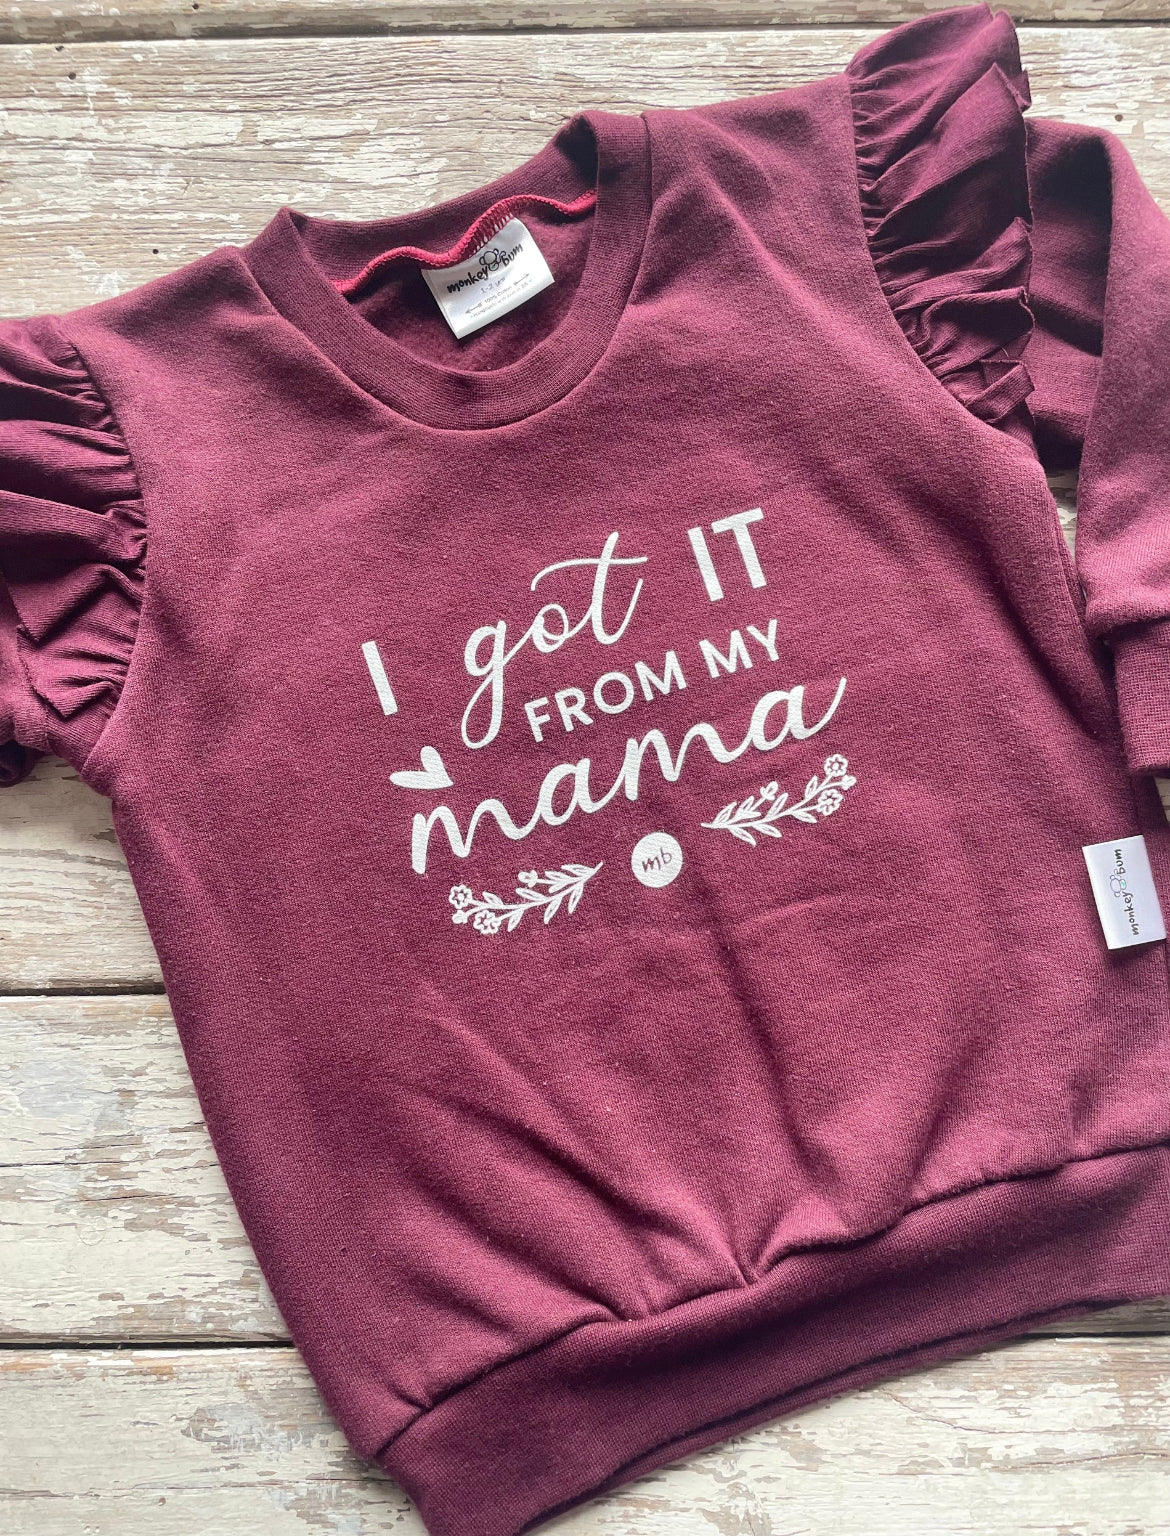 Sweatshirt: I got it from my Mama